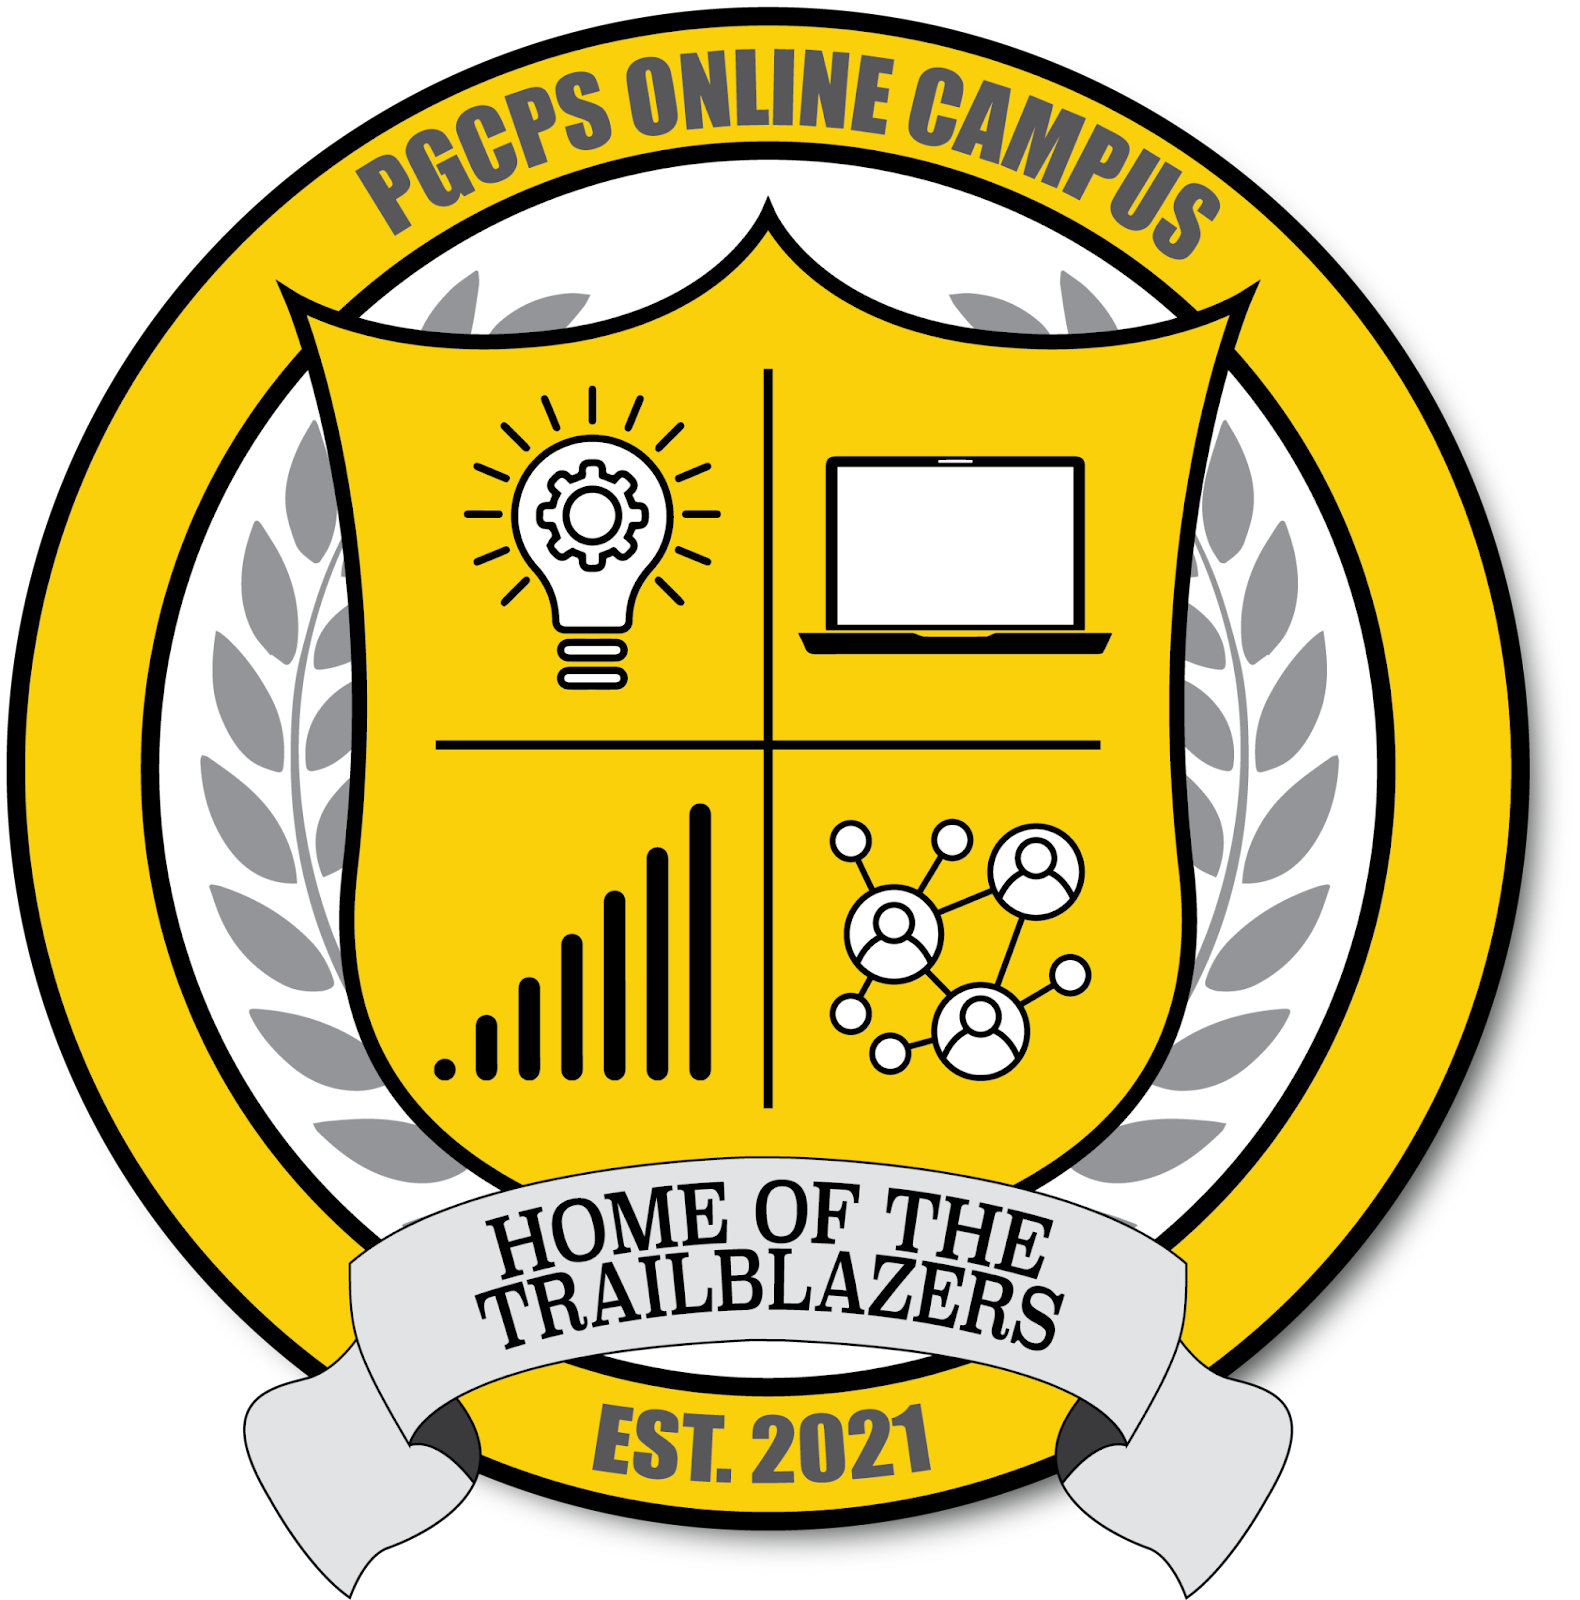 PGCPS Online Campus